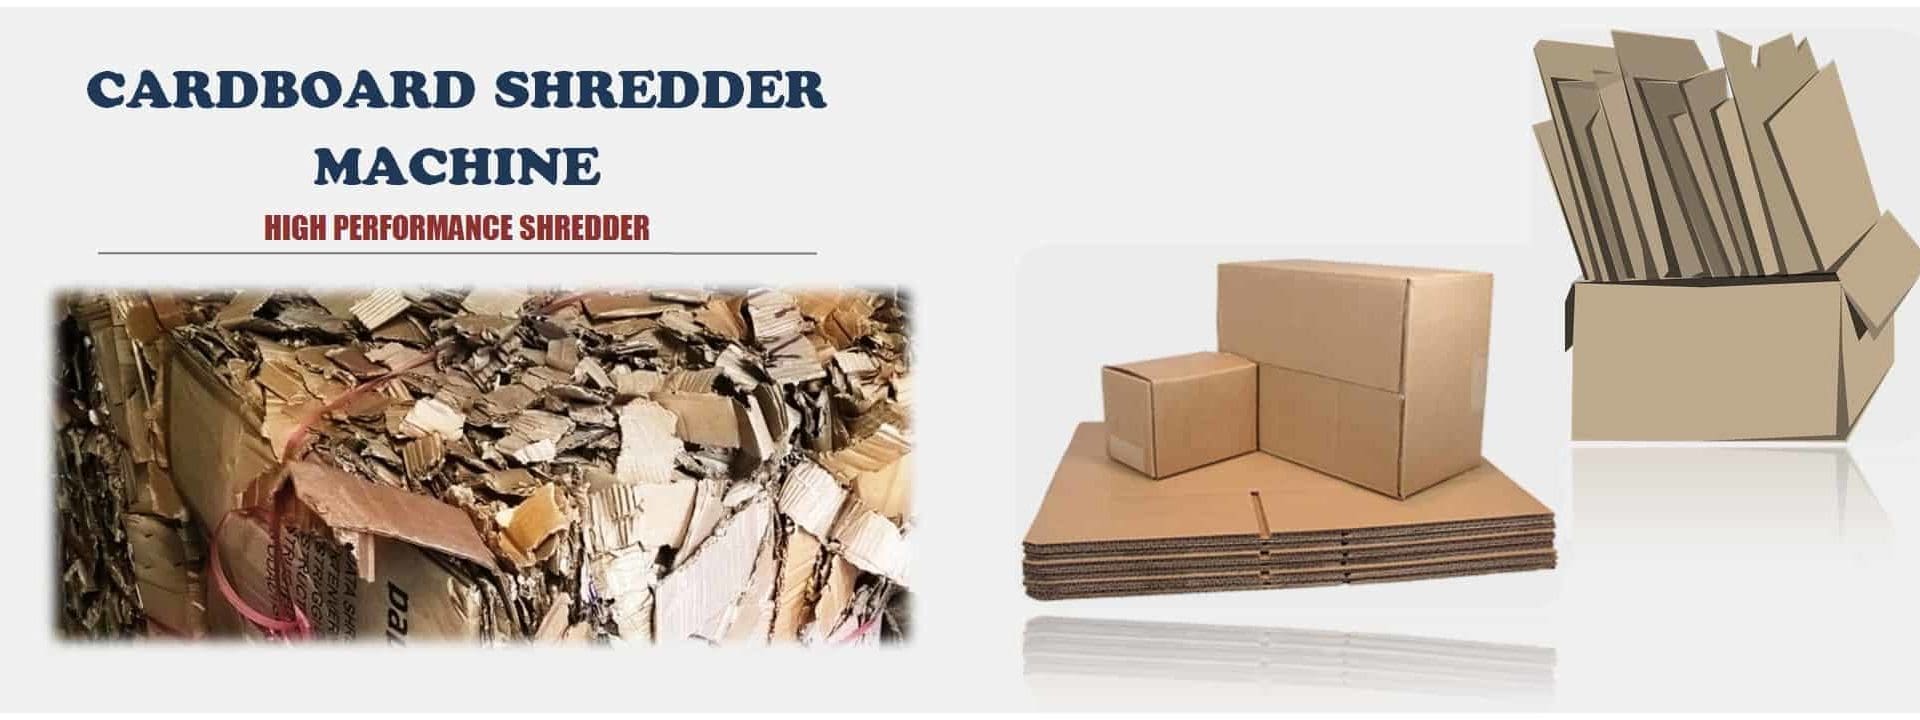 Cardboard Shredder Machine